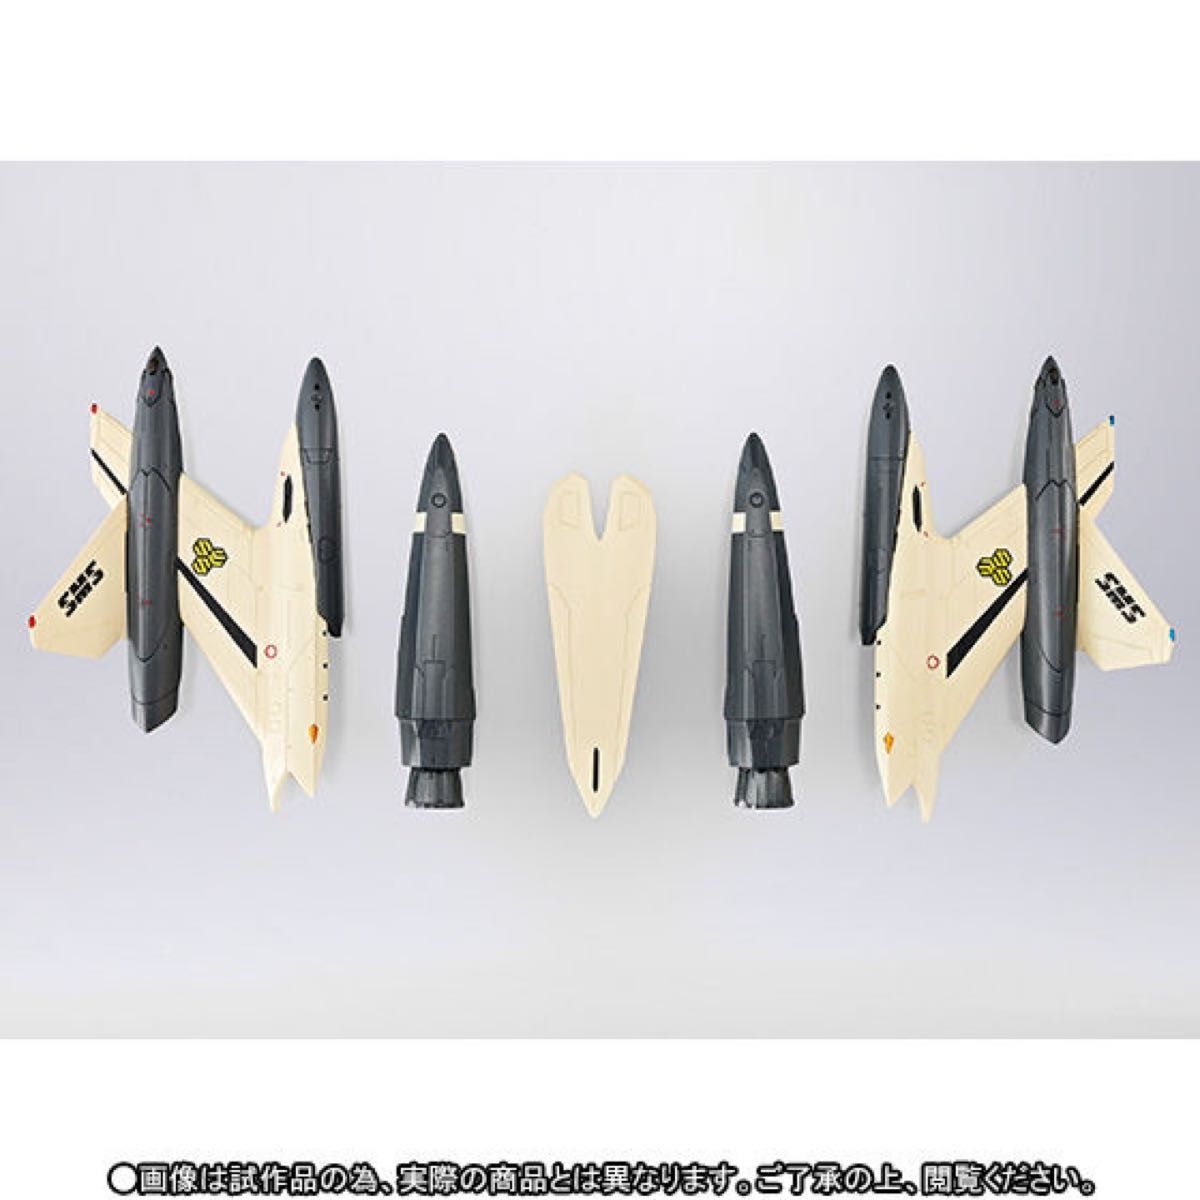 DX超合金 YF-29 デュランダルバルキリー(イサム機)・スーパーパーツ(2点セット)2点とも未開封